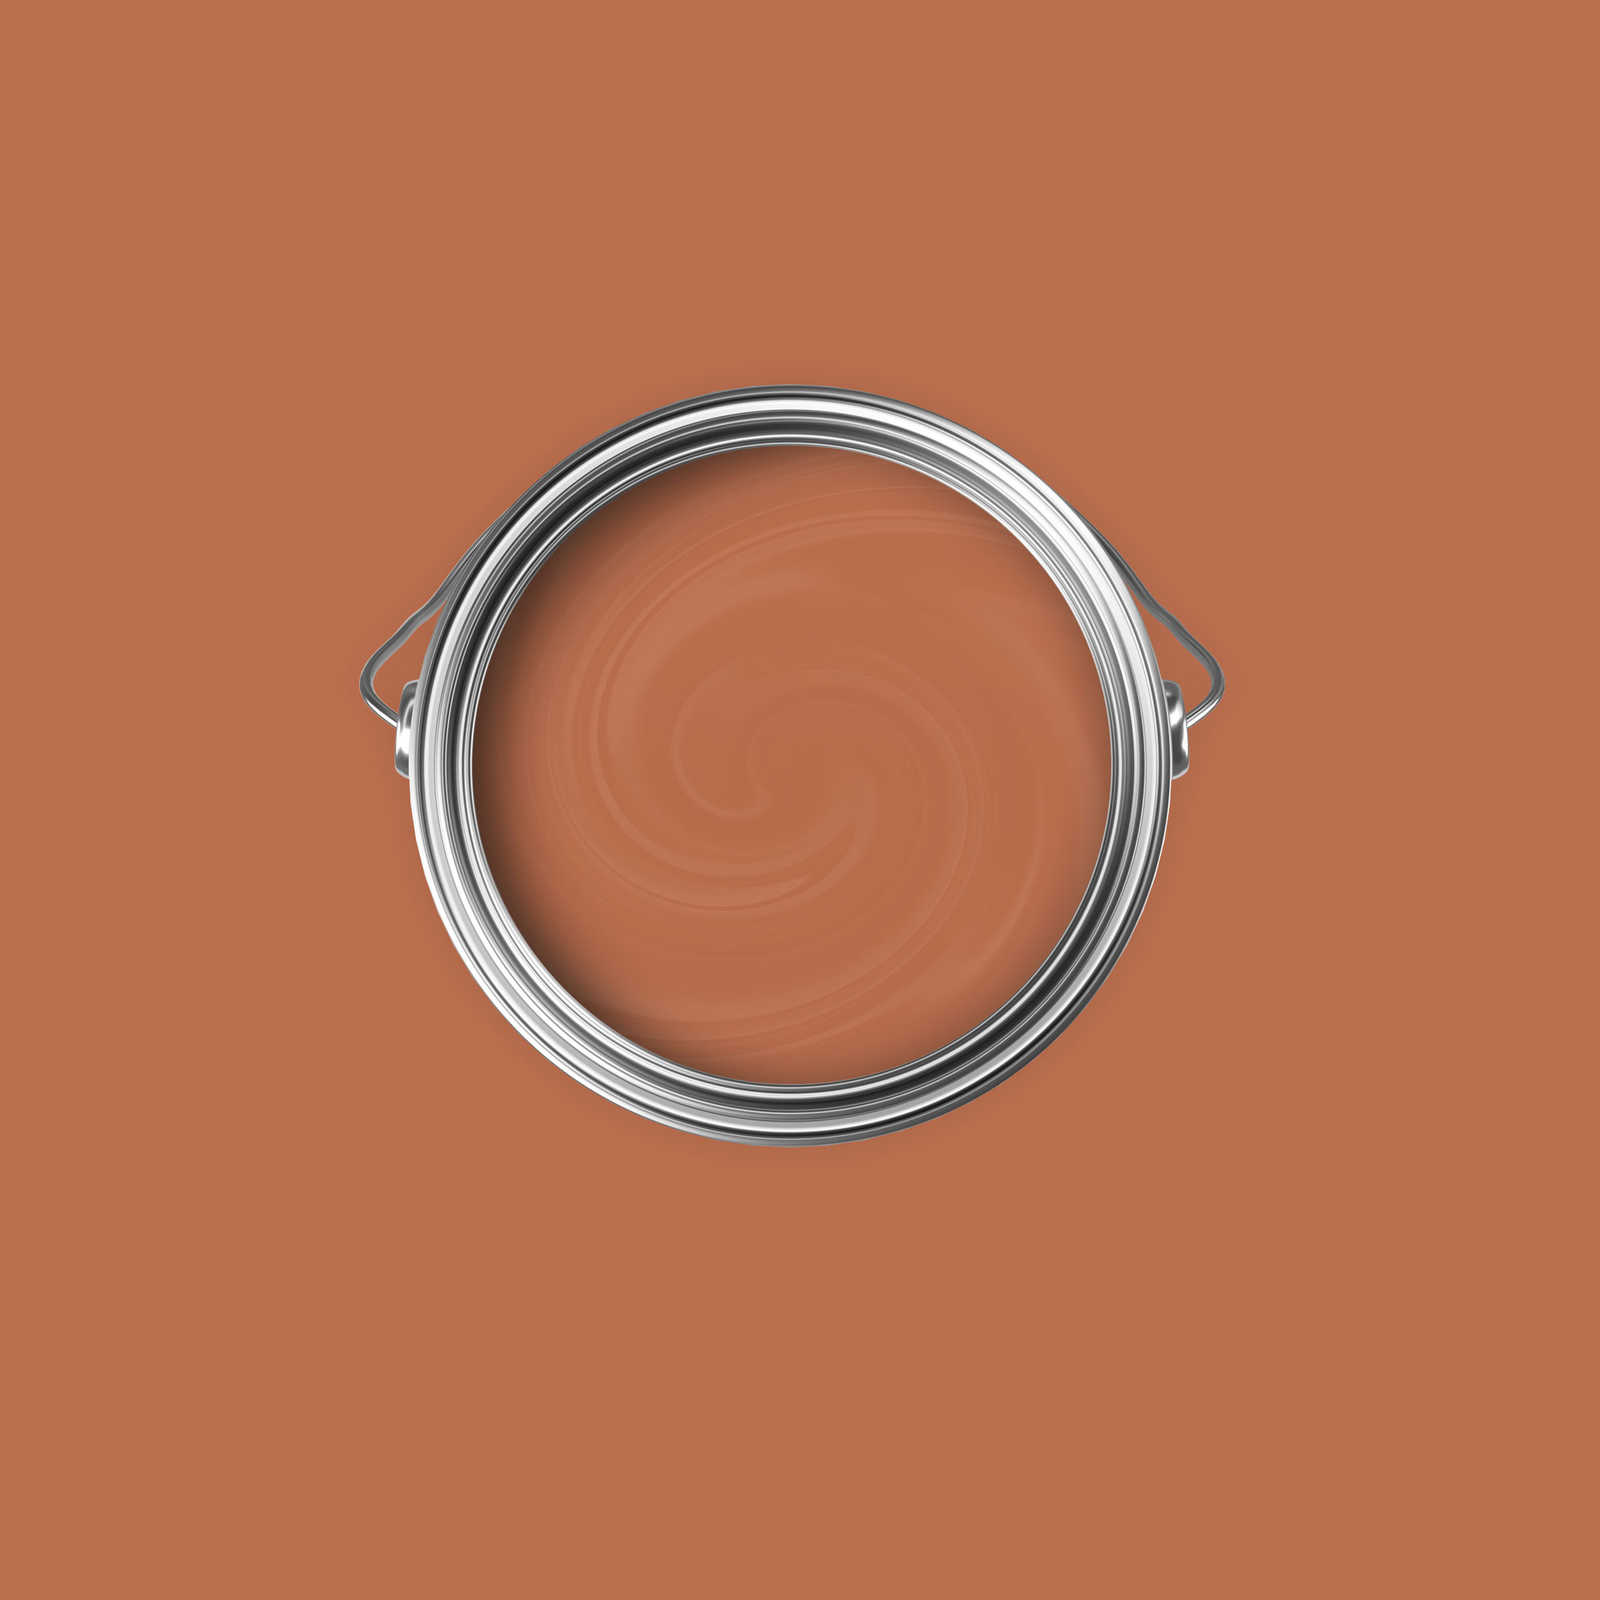             Premium Wandfarbe anregendes Kupfer »Pretty Peach« NW905 – 2,5 Liter
        